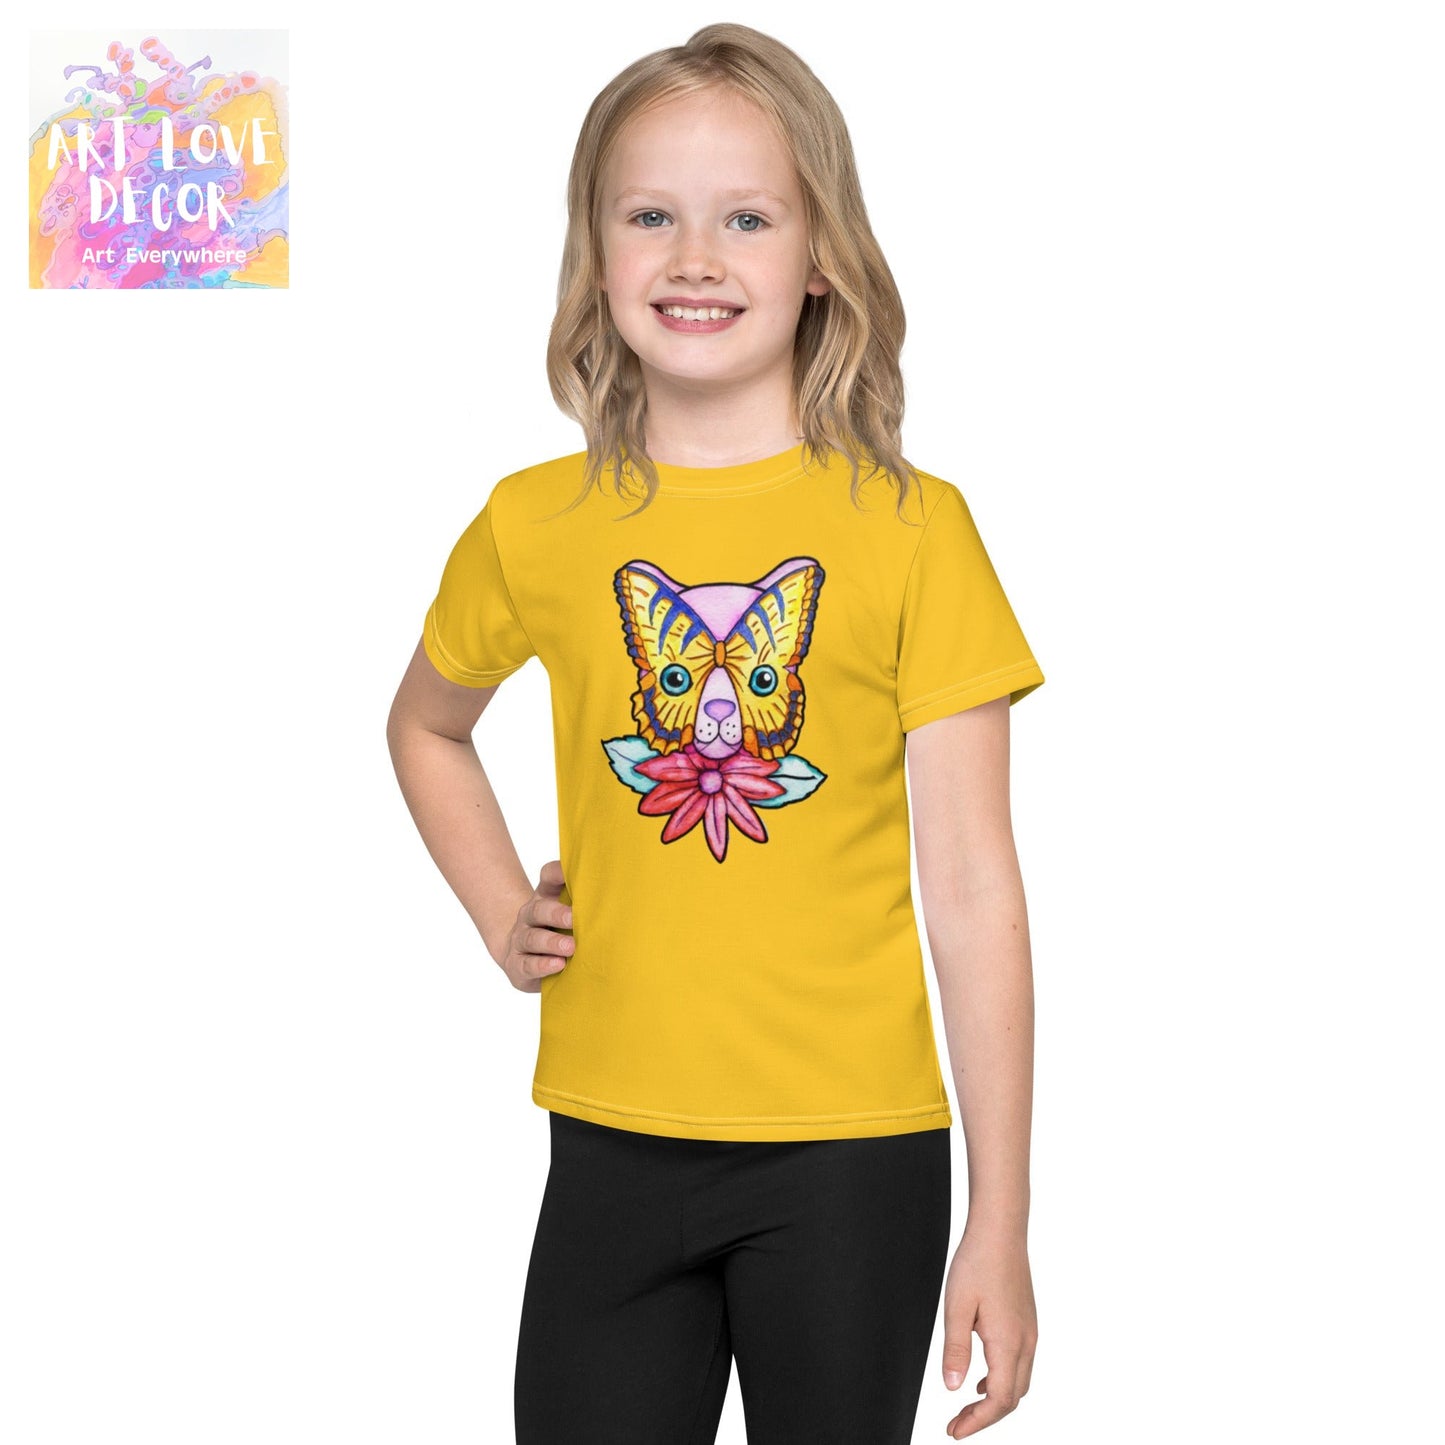 Kitty Cat Flower Kids crew neck t-shirt - Art Love Decor